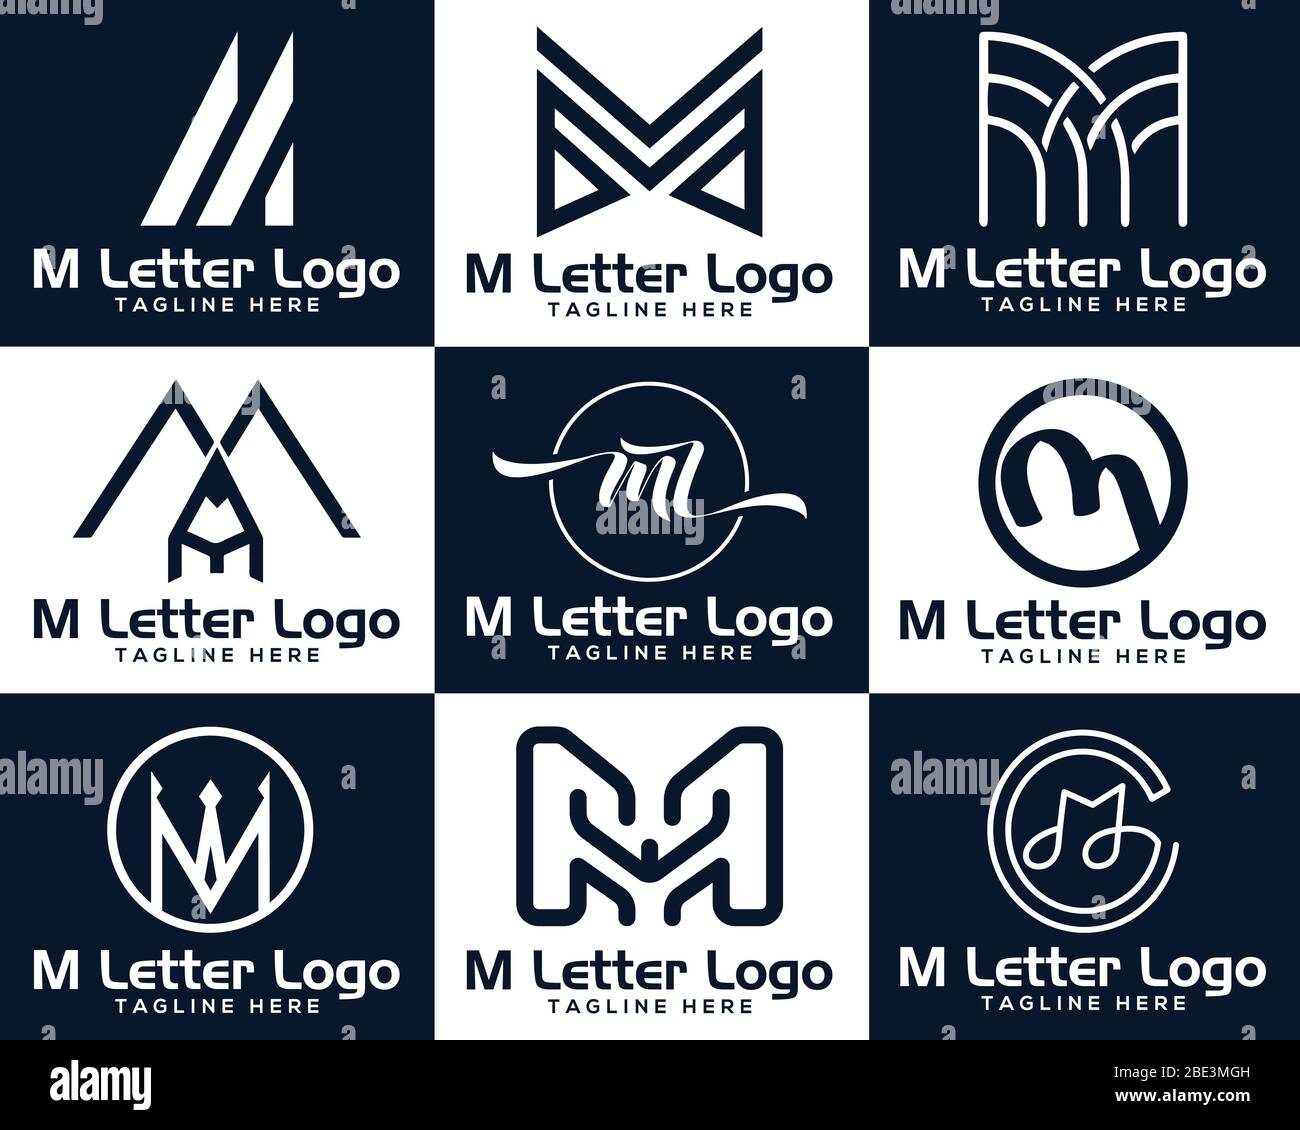 Modern and creative M letter logo design.Letter M black and white logo. Stock Vector